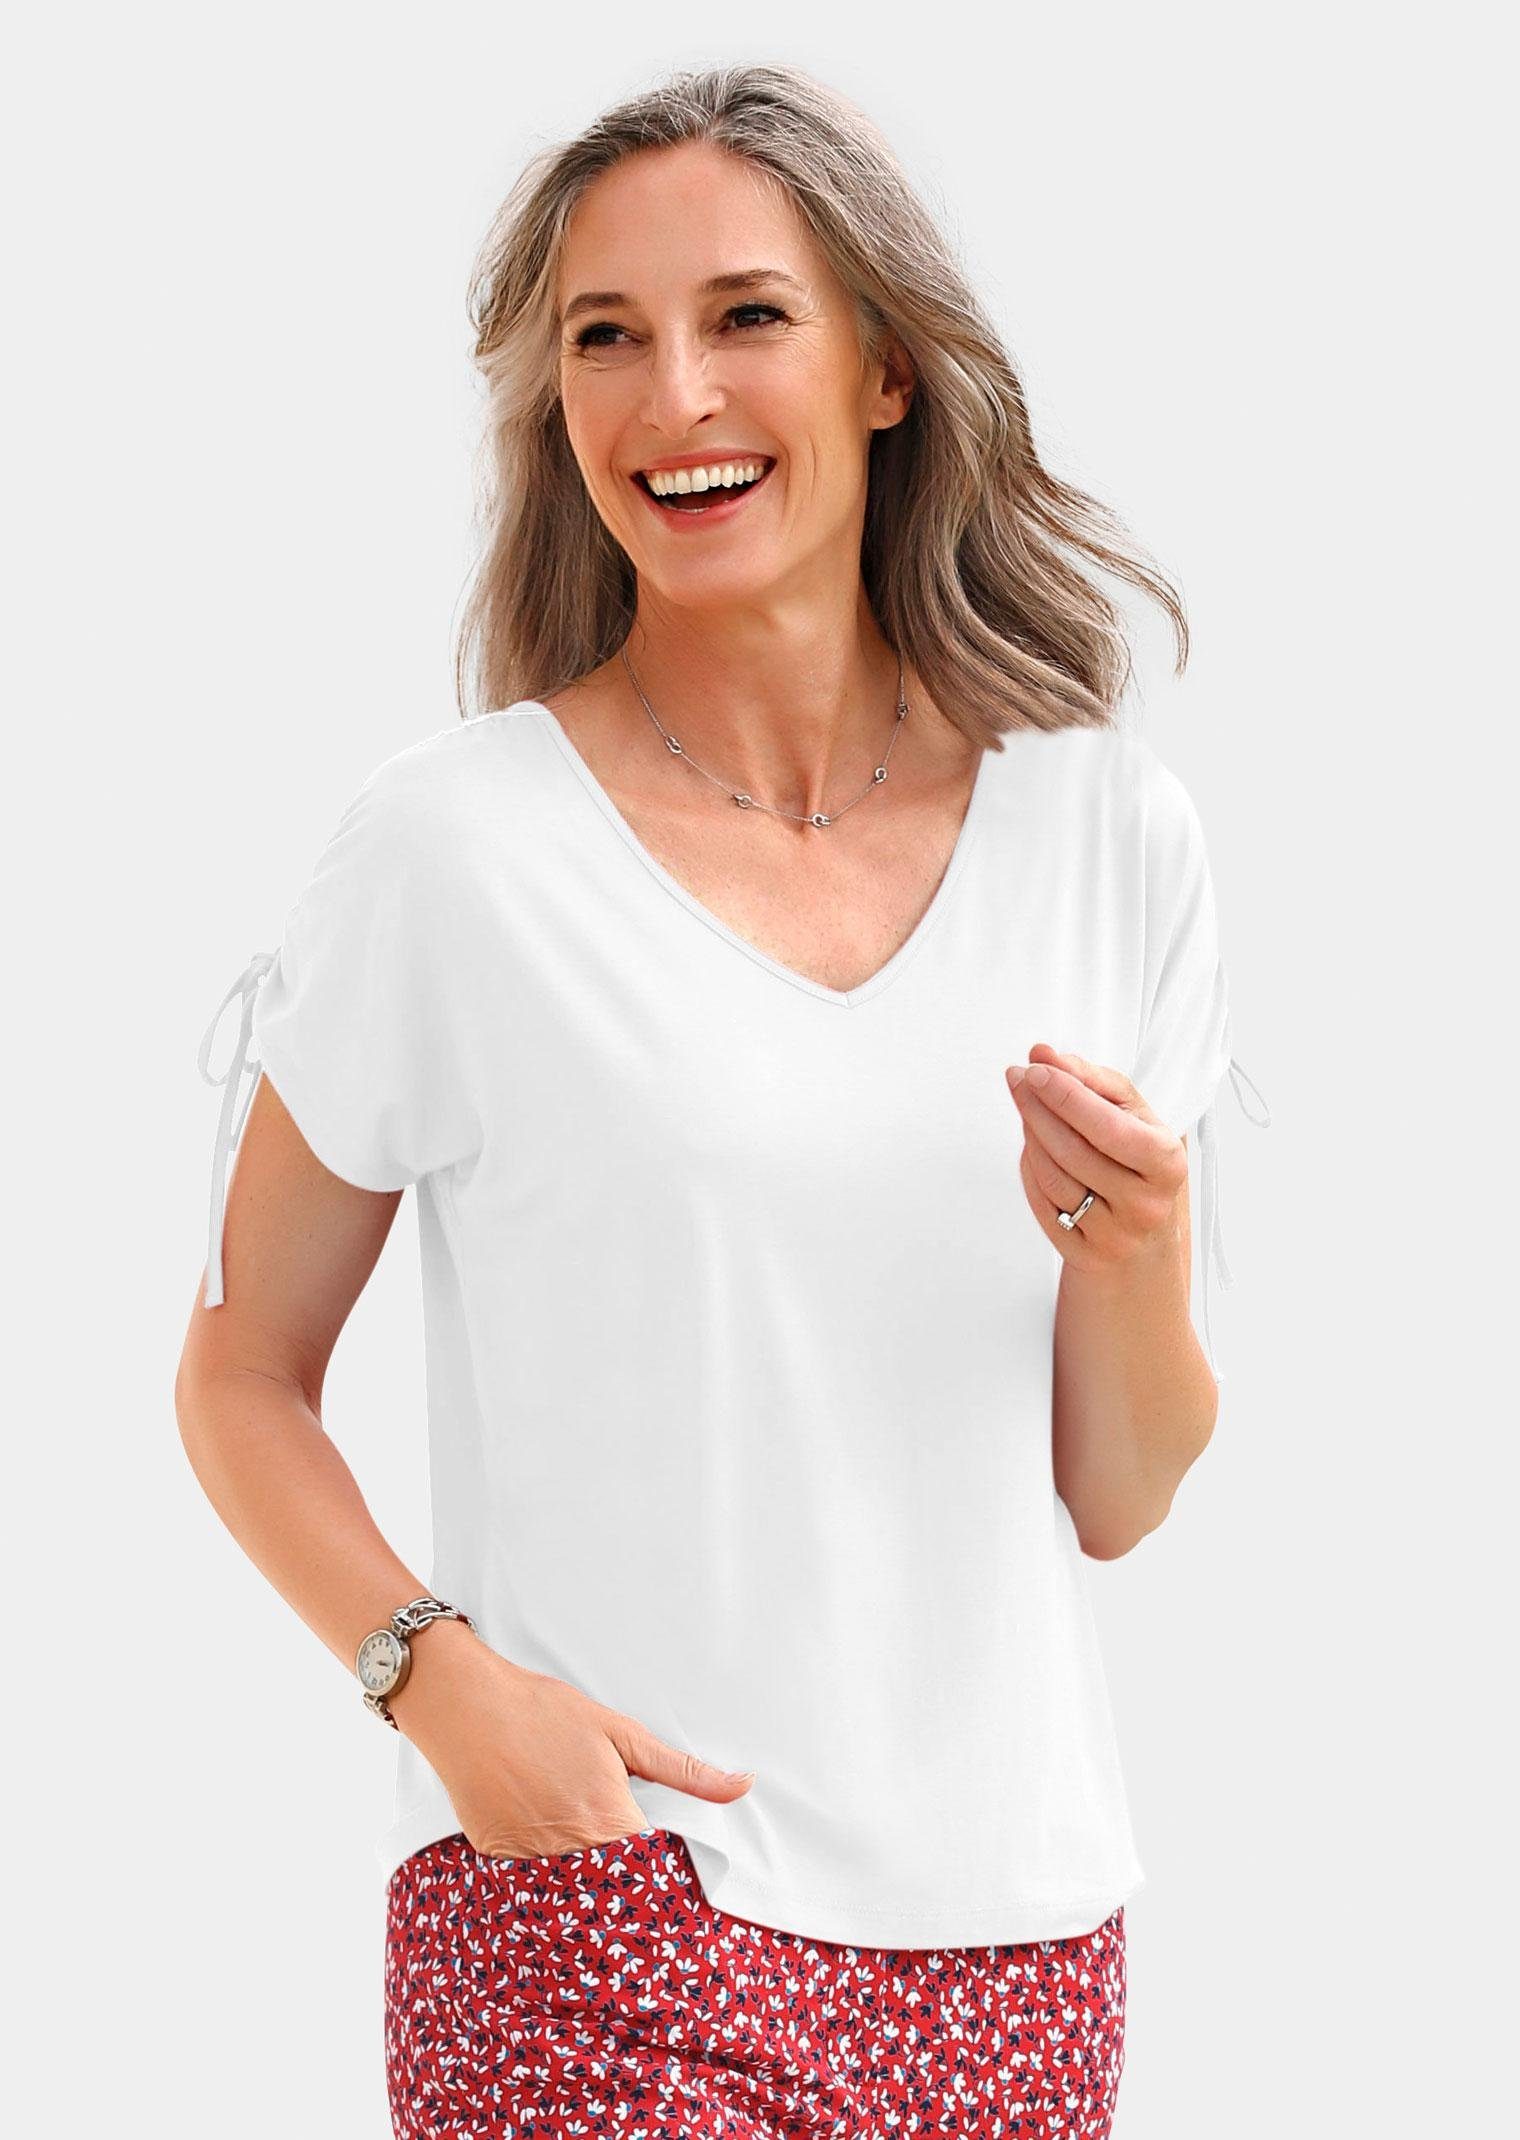 GOLDNER Print-Shirt Elegantes weiß Jersey-Shirt Kurzgröße